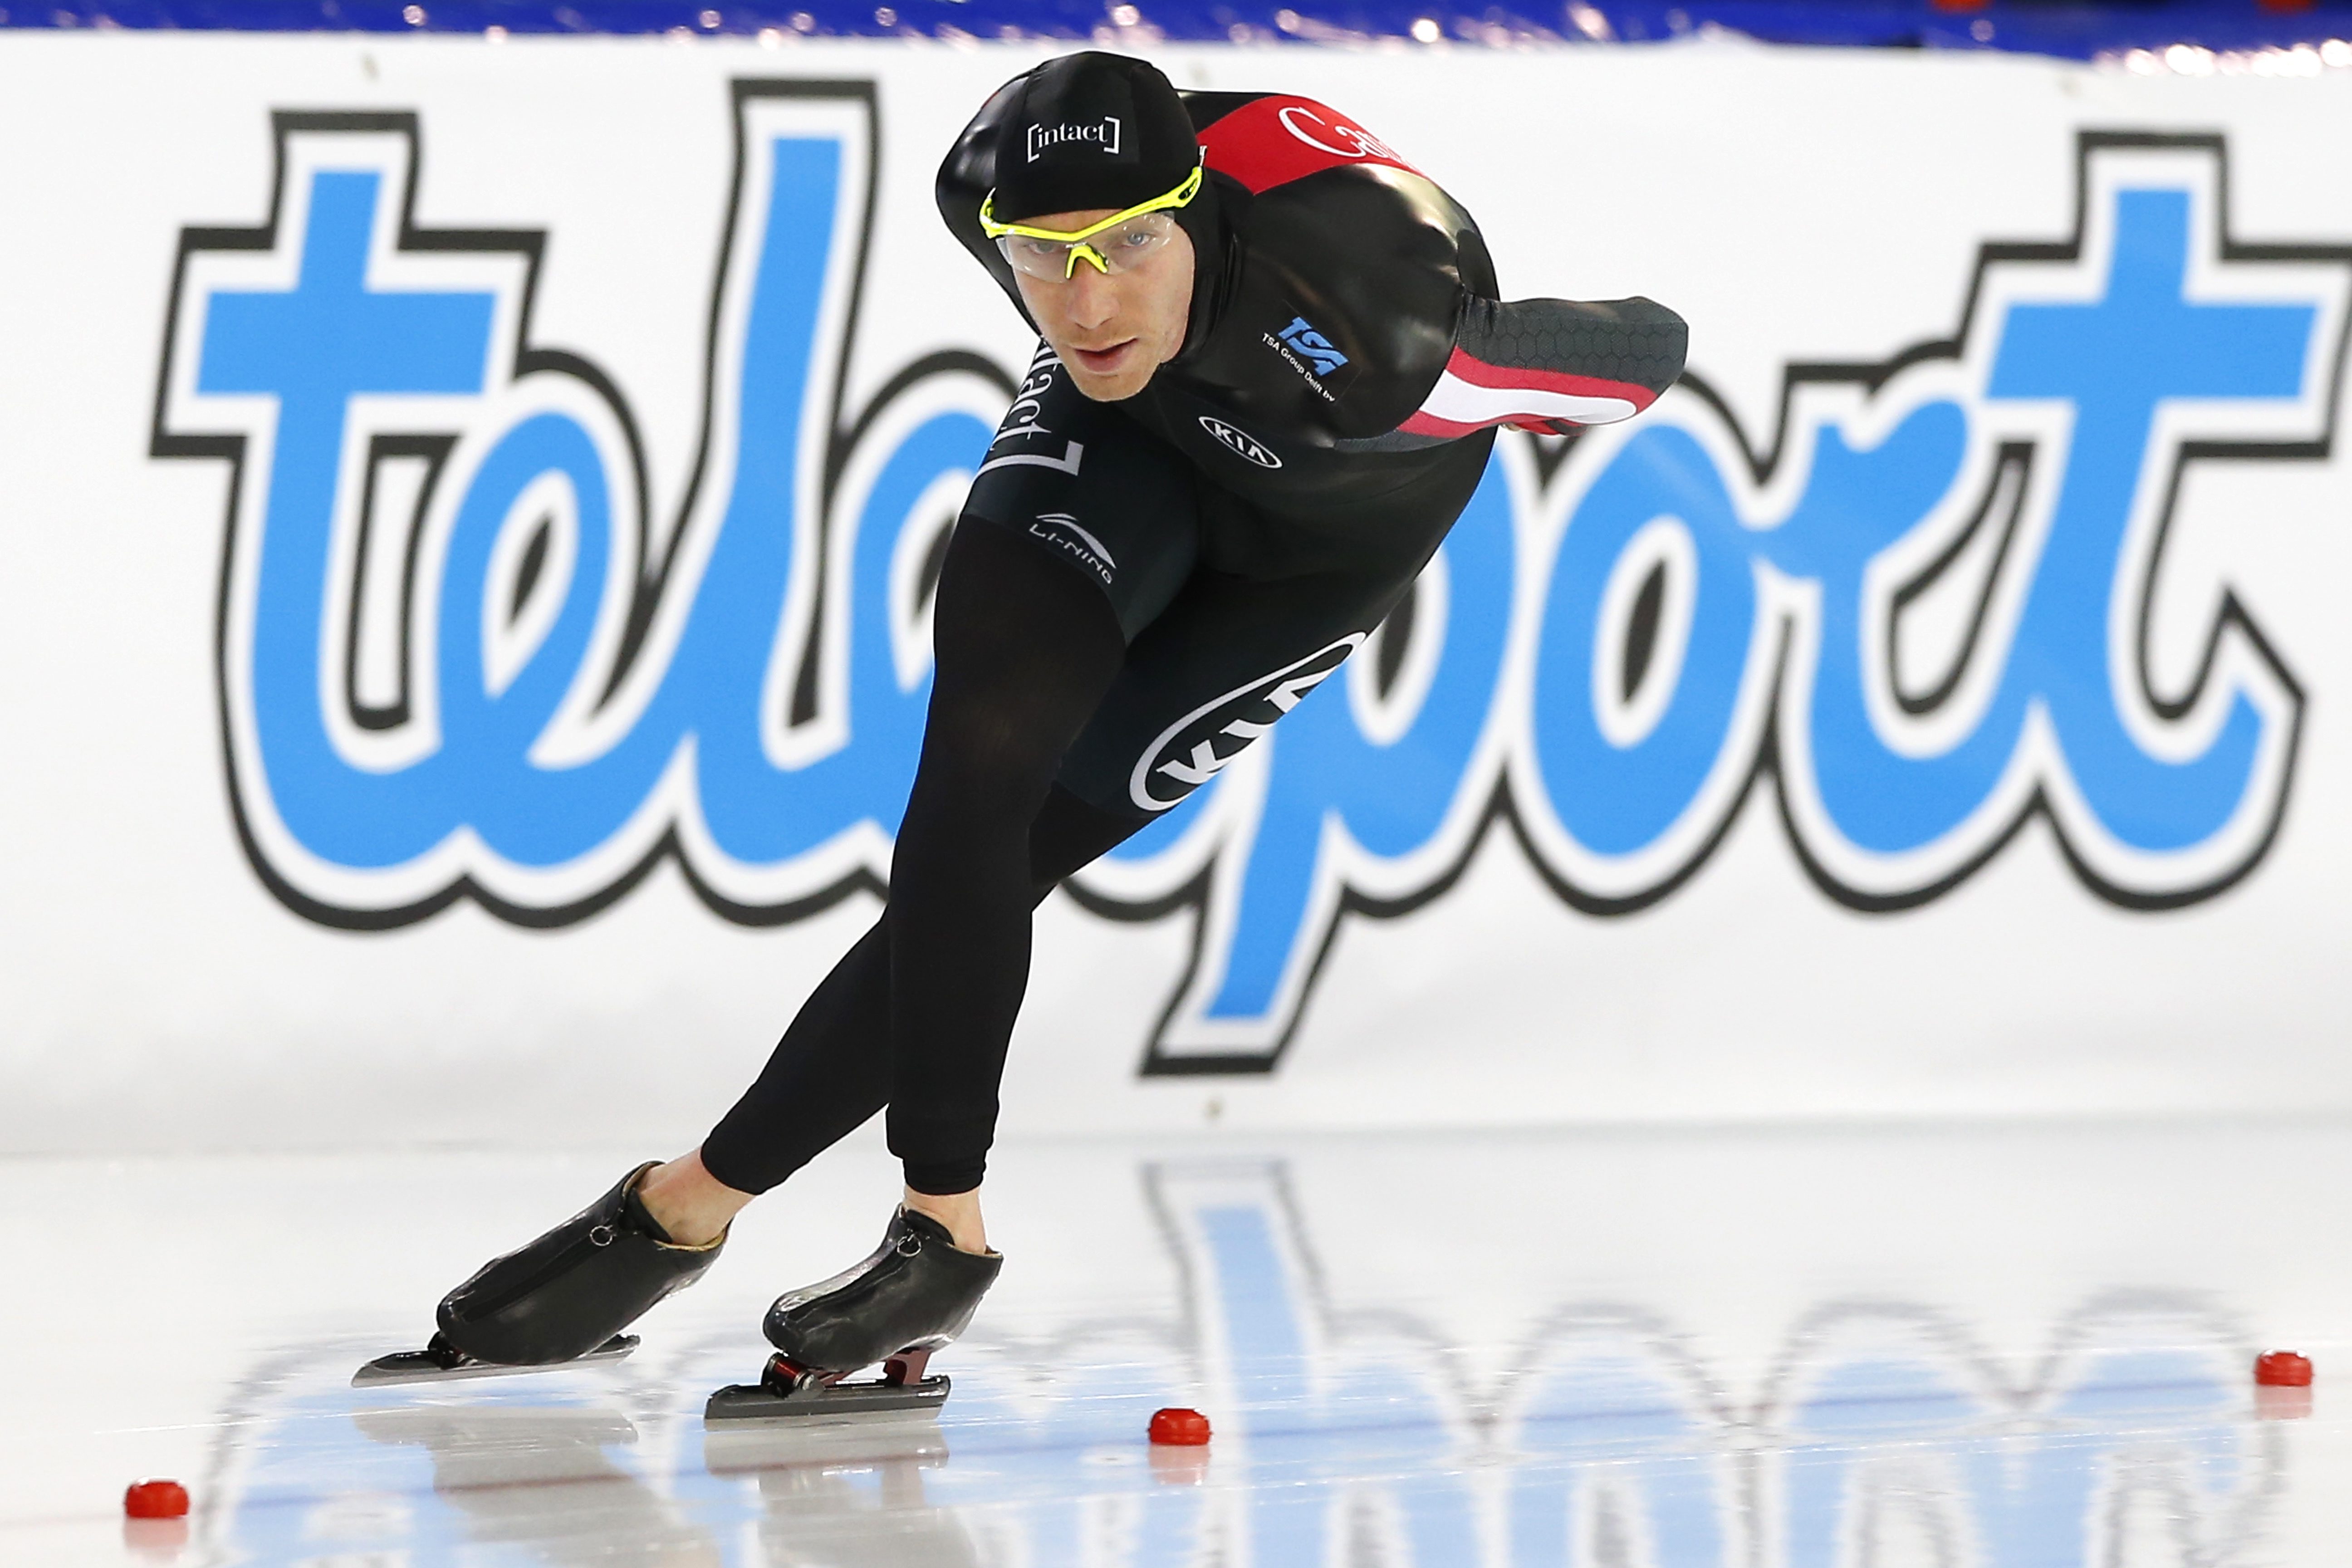 Canada's Ted-Jan Bloemen competes during the men's 10,000 meters race of the Speedskating World Cup at the Thialf ice rink in Heerenveen, Netherlands, Sunday, Dec. 11, 2016. (AP Photo/Peter Dejong)